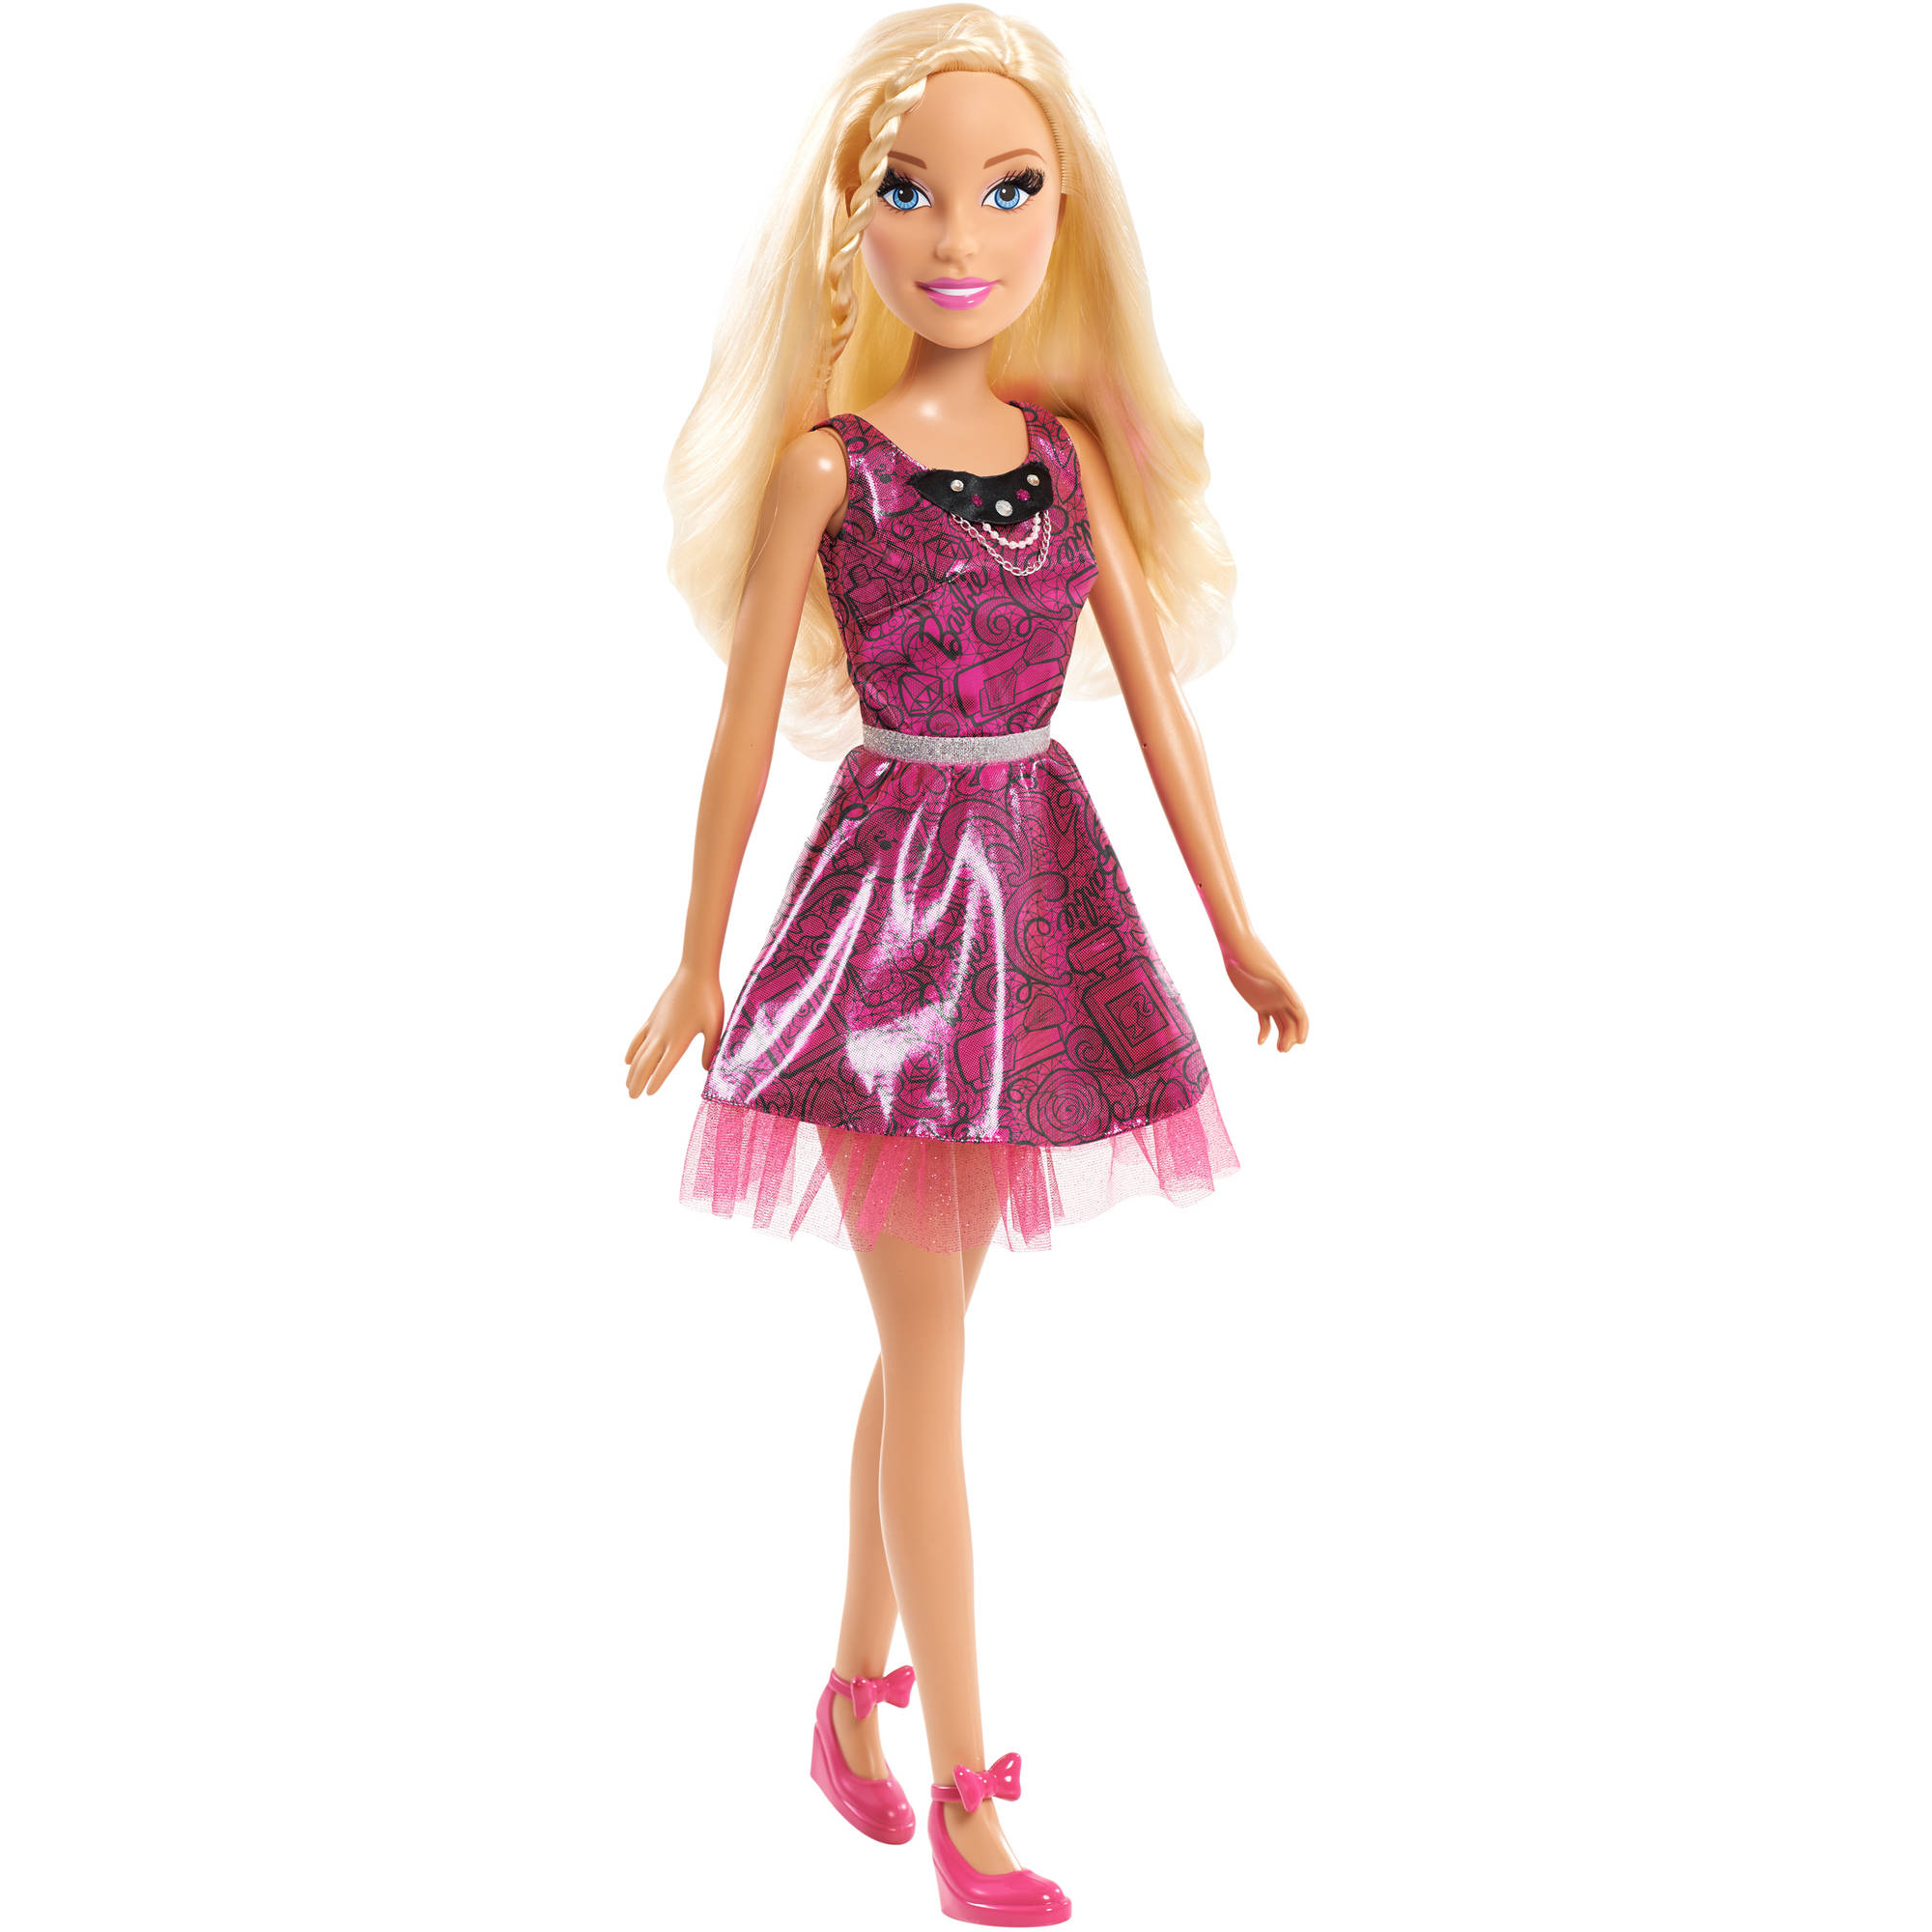 Barbie 28" Doll.